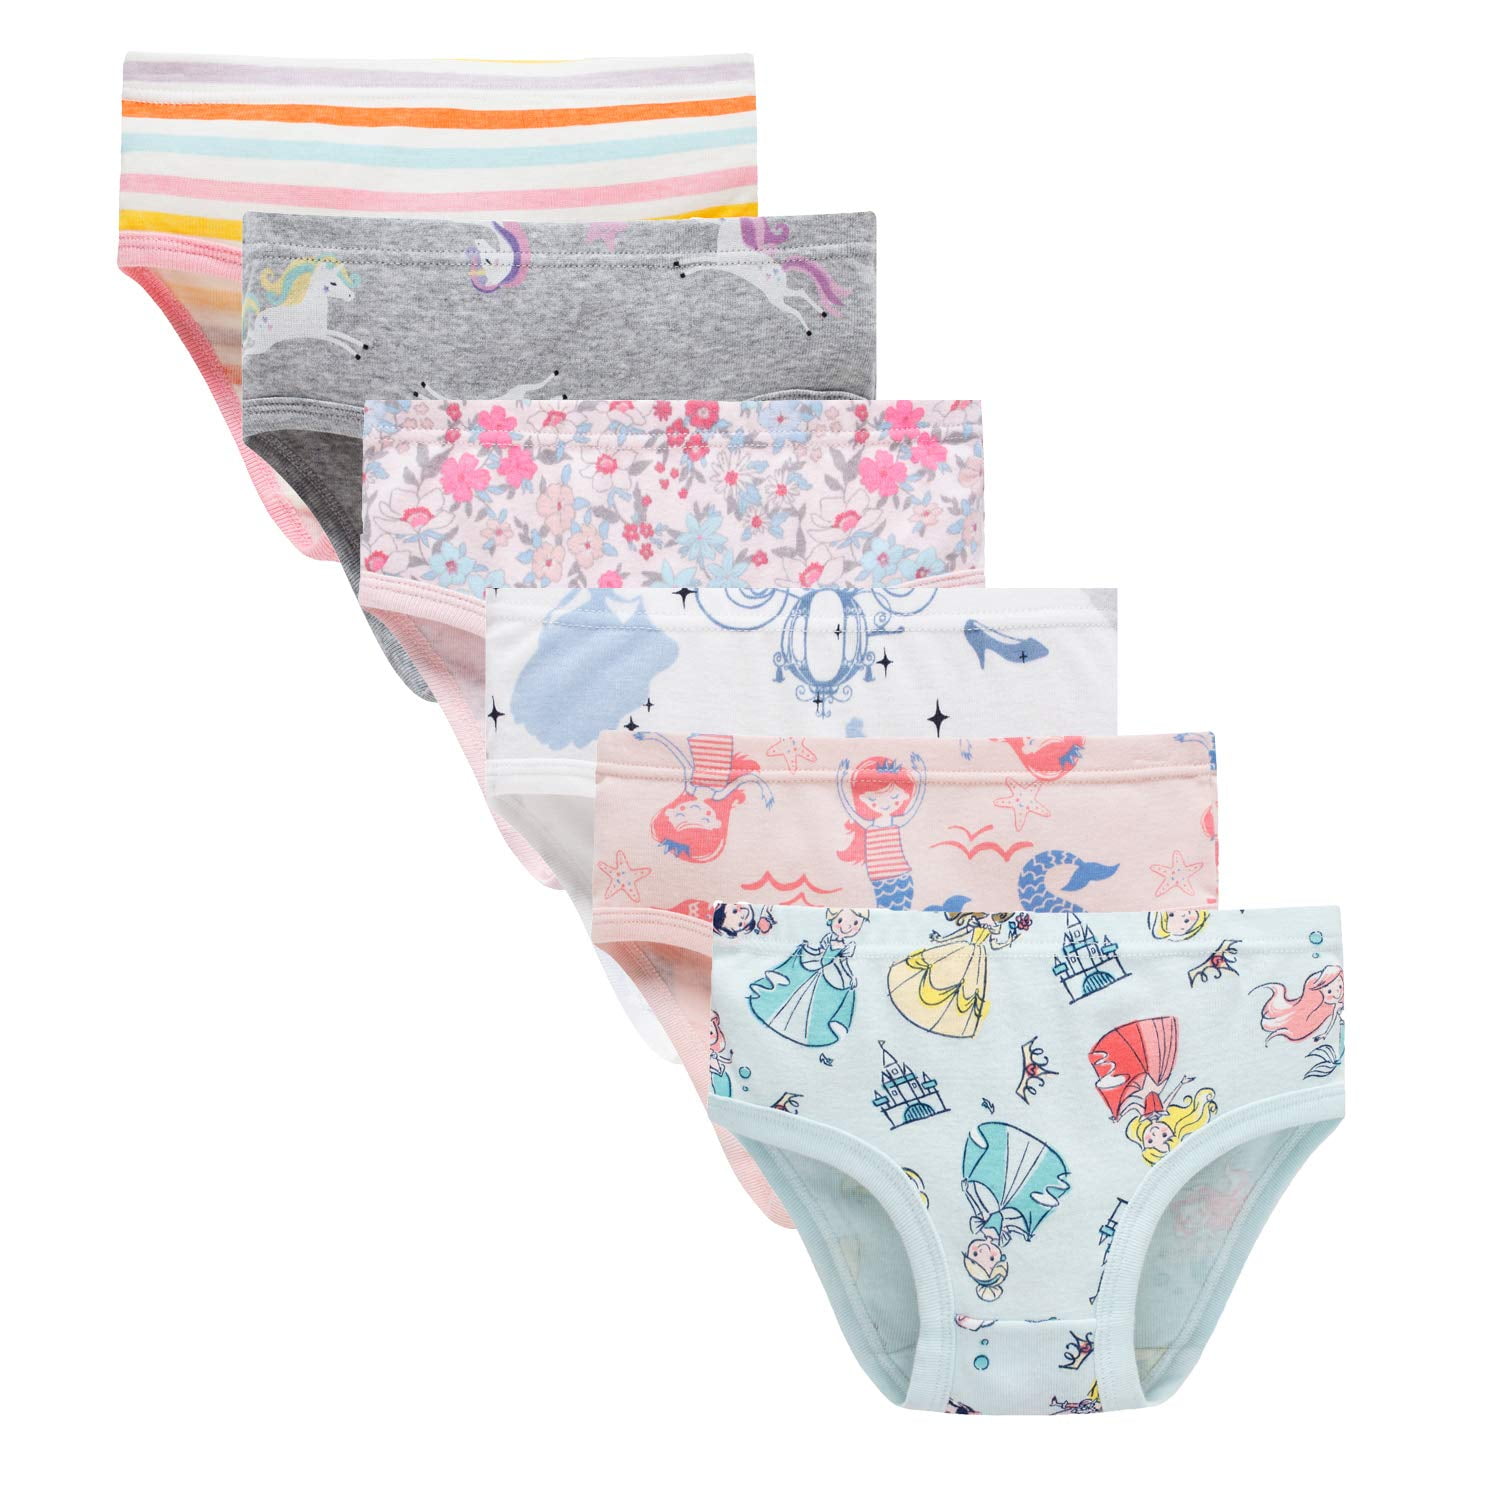 Hahan Baby Soft Cotton Panties Little Girls'Briefs Toddler Unicorn  Underwear 2/3T Multi Color